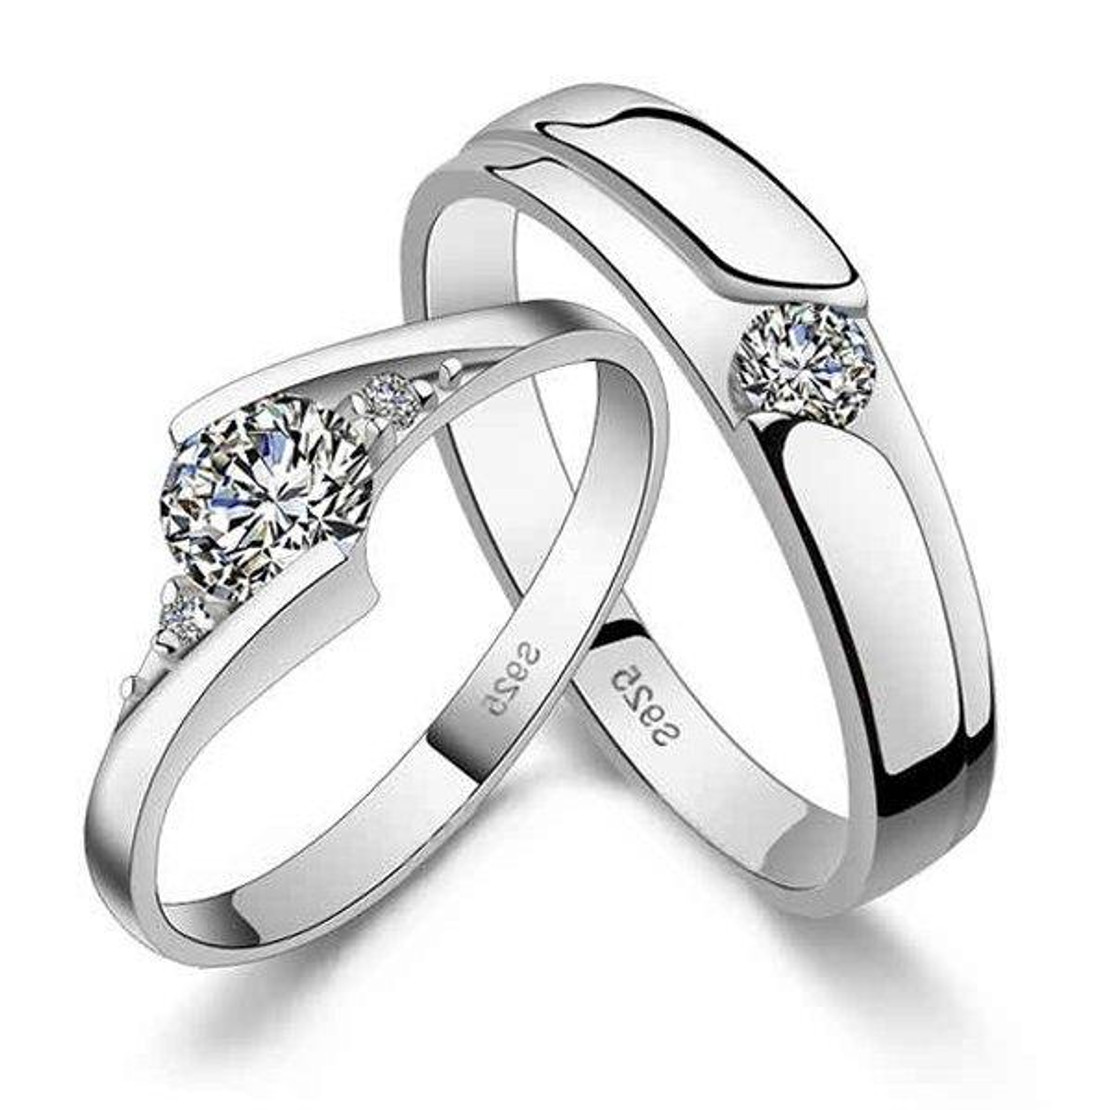 Design Ring & Engagement Ceremony Invitation Cards Online